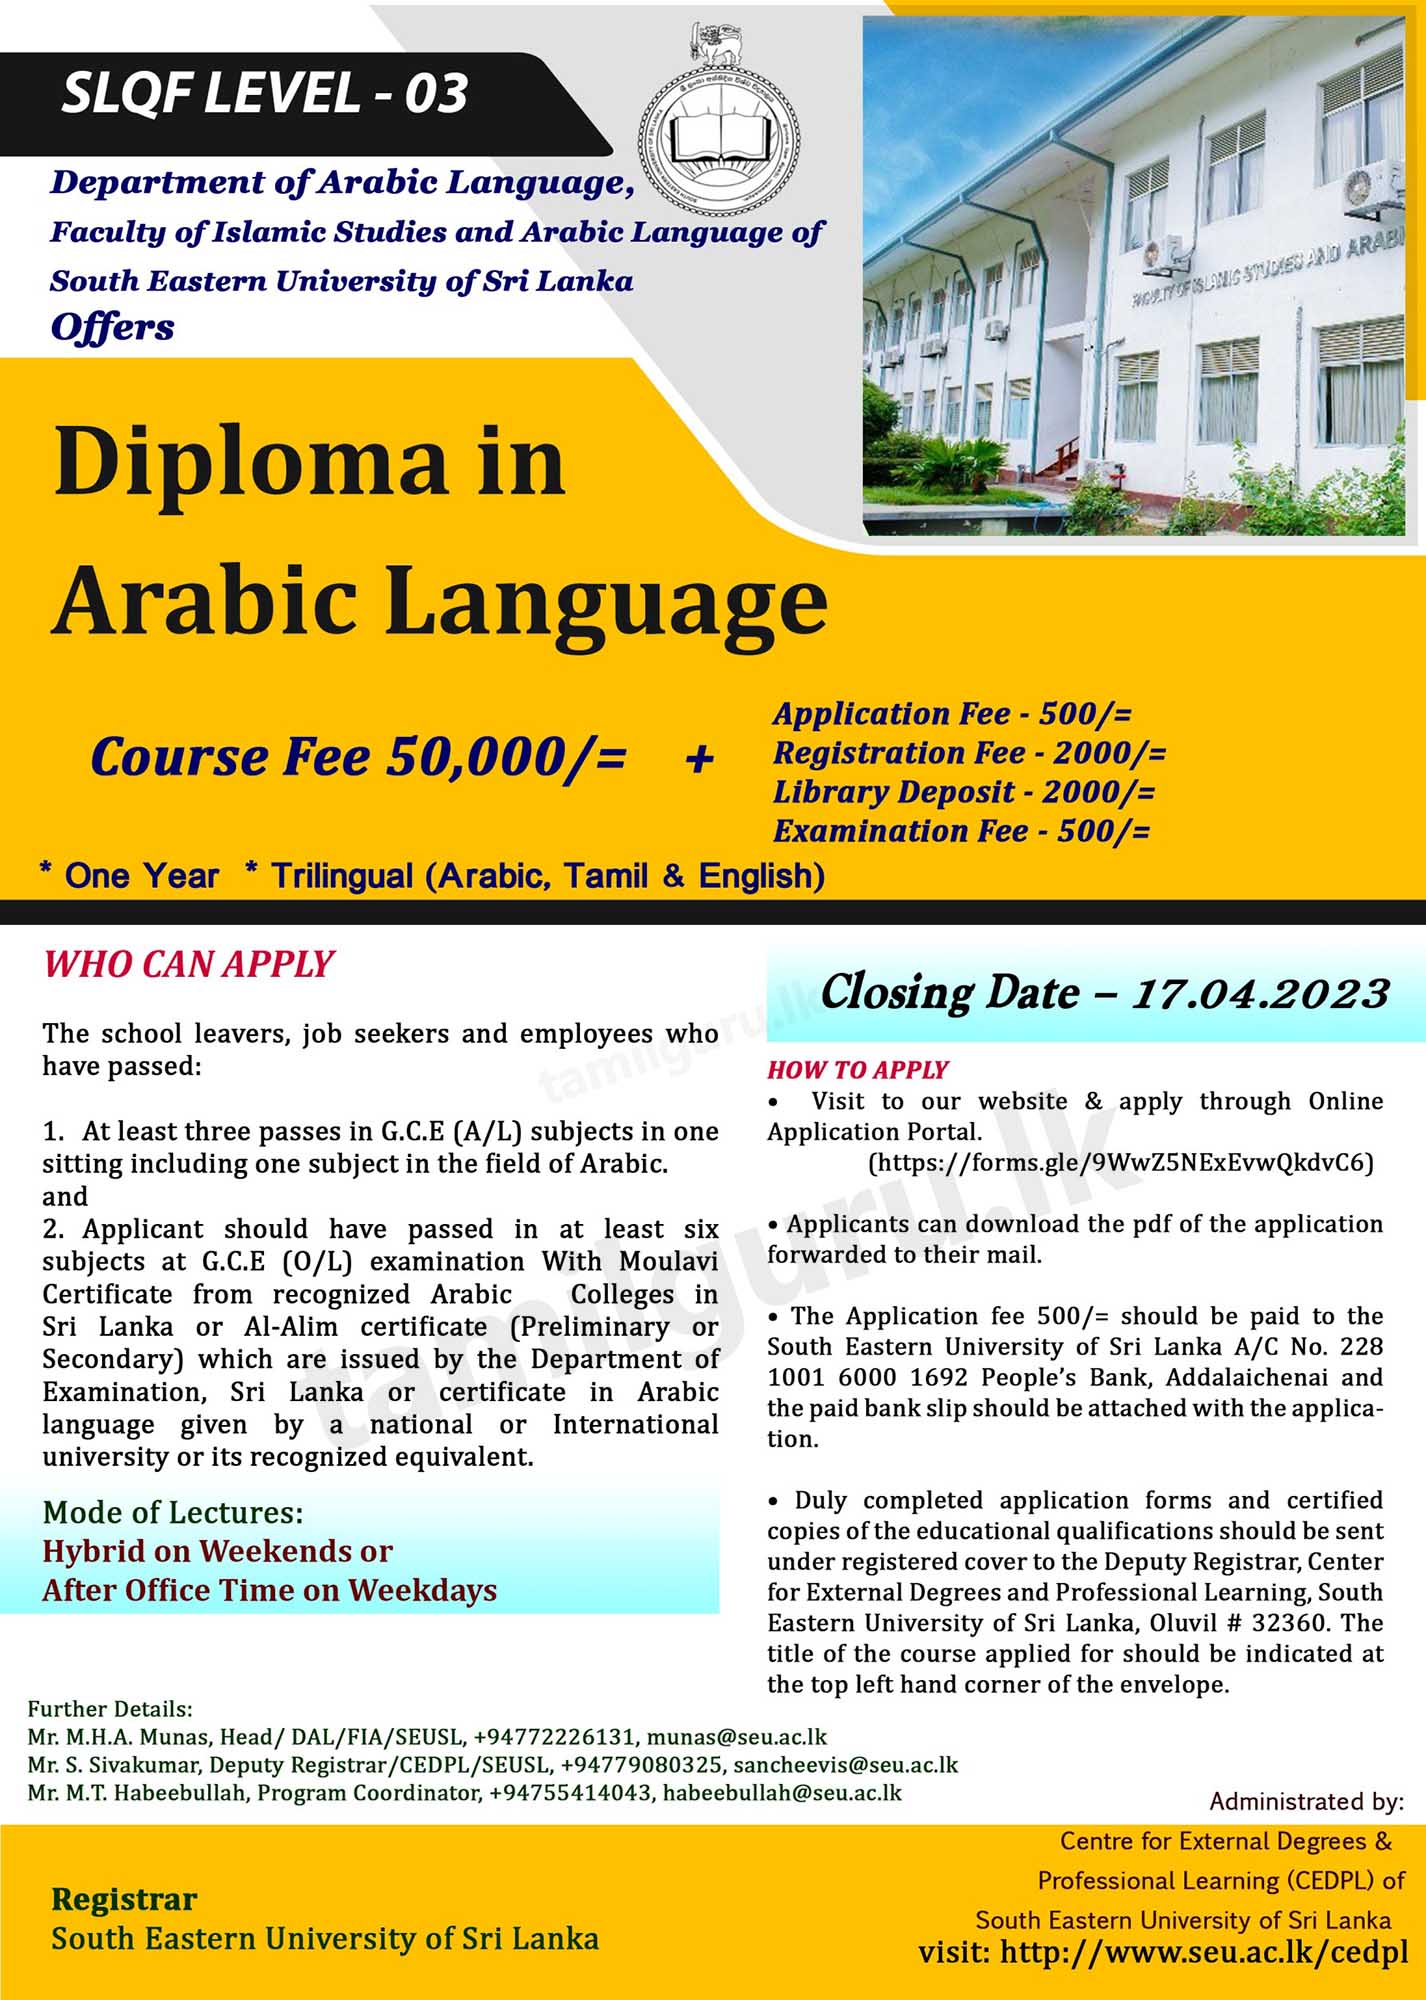 Diploma in Arabic Language at South Eastern University of Sri Lanka